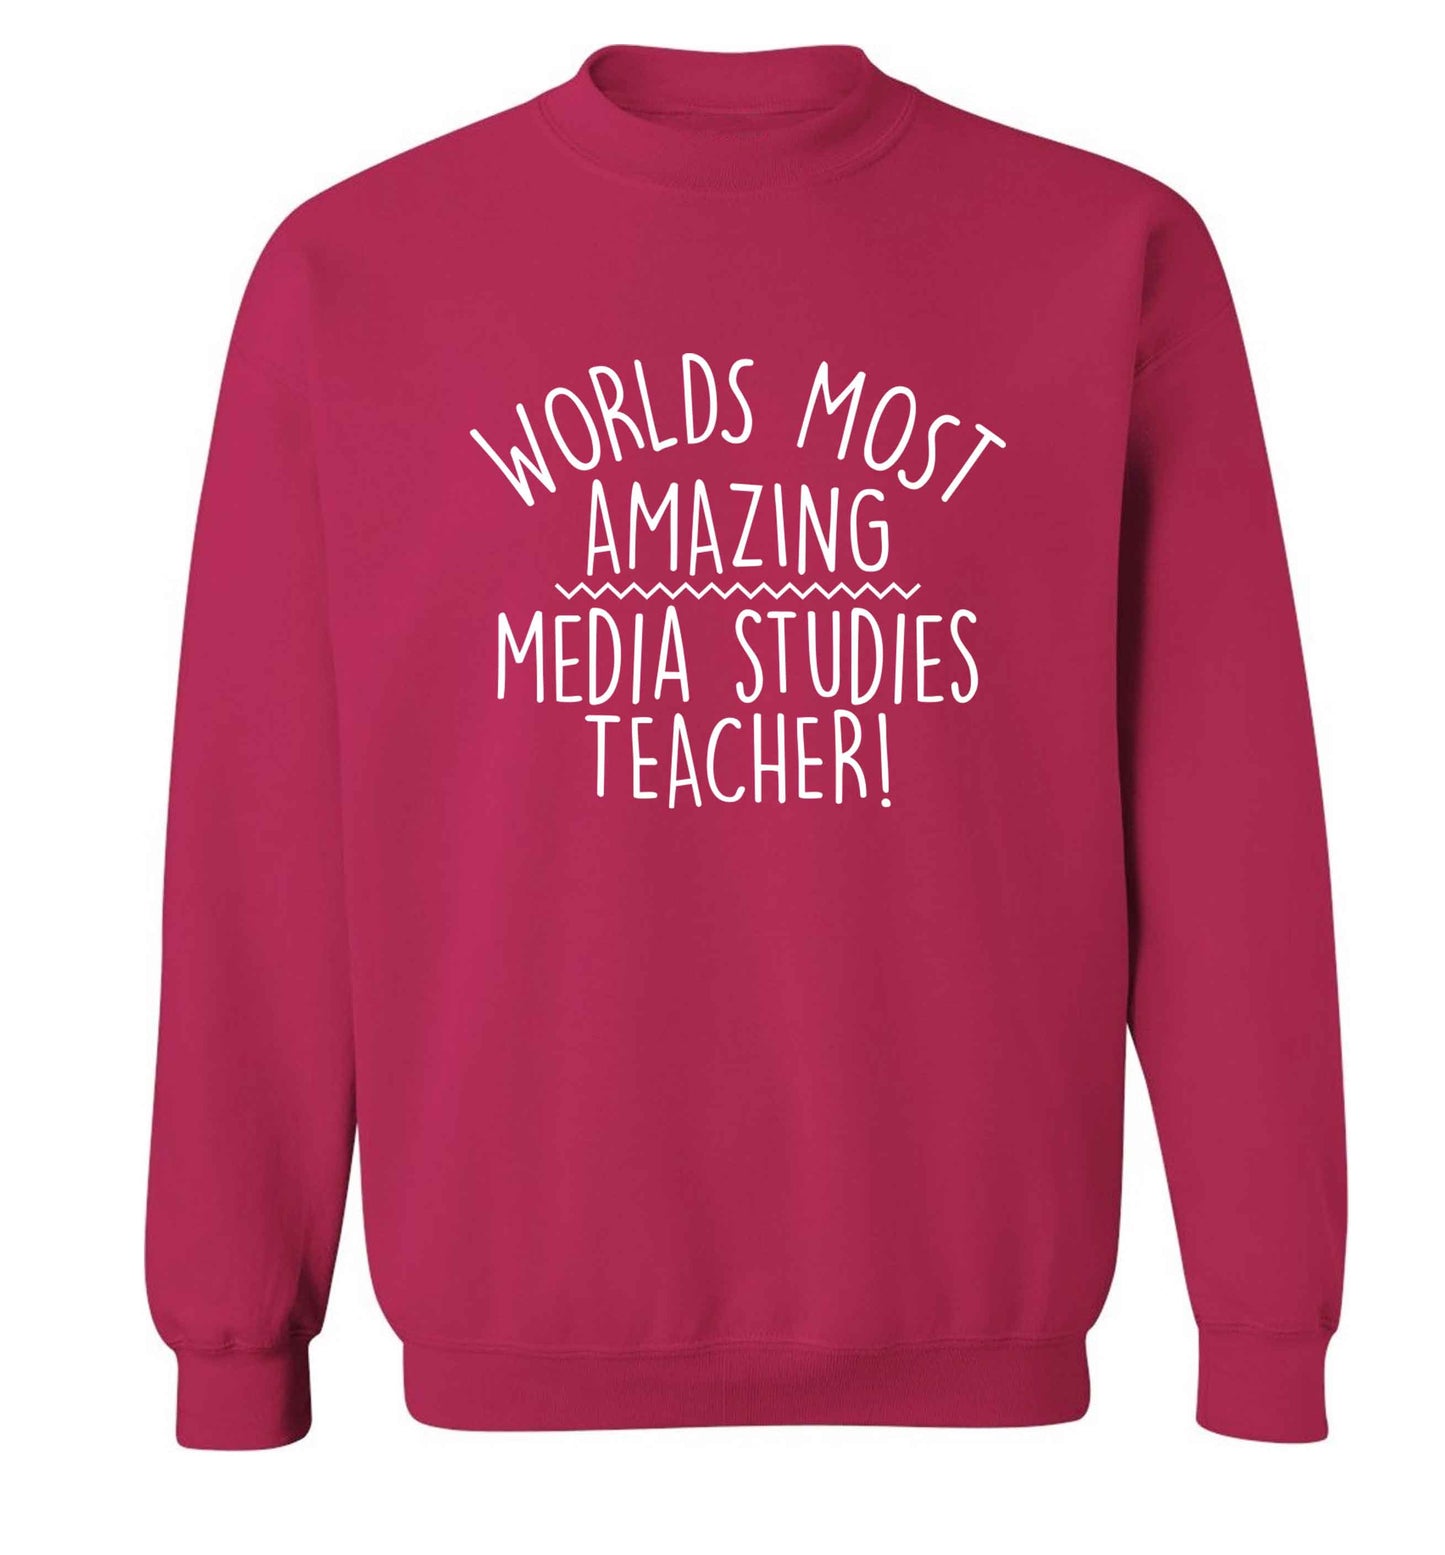 Worlds most amazing media studies teacher adult's unisex pink sweater 2XL